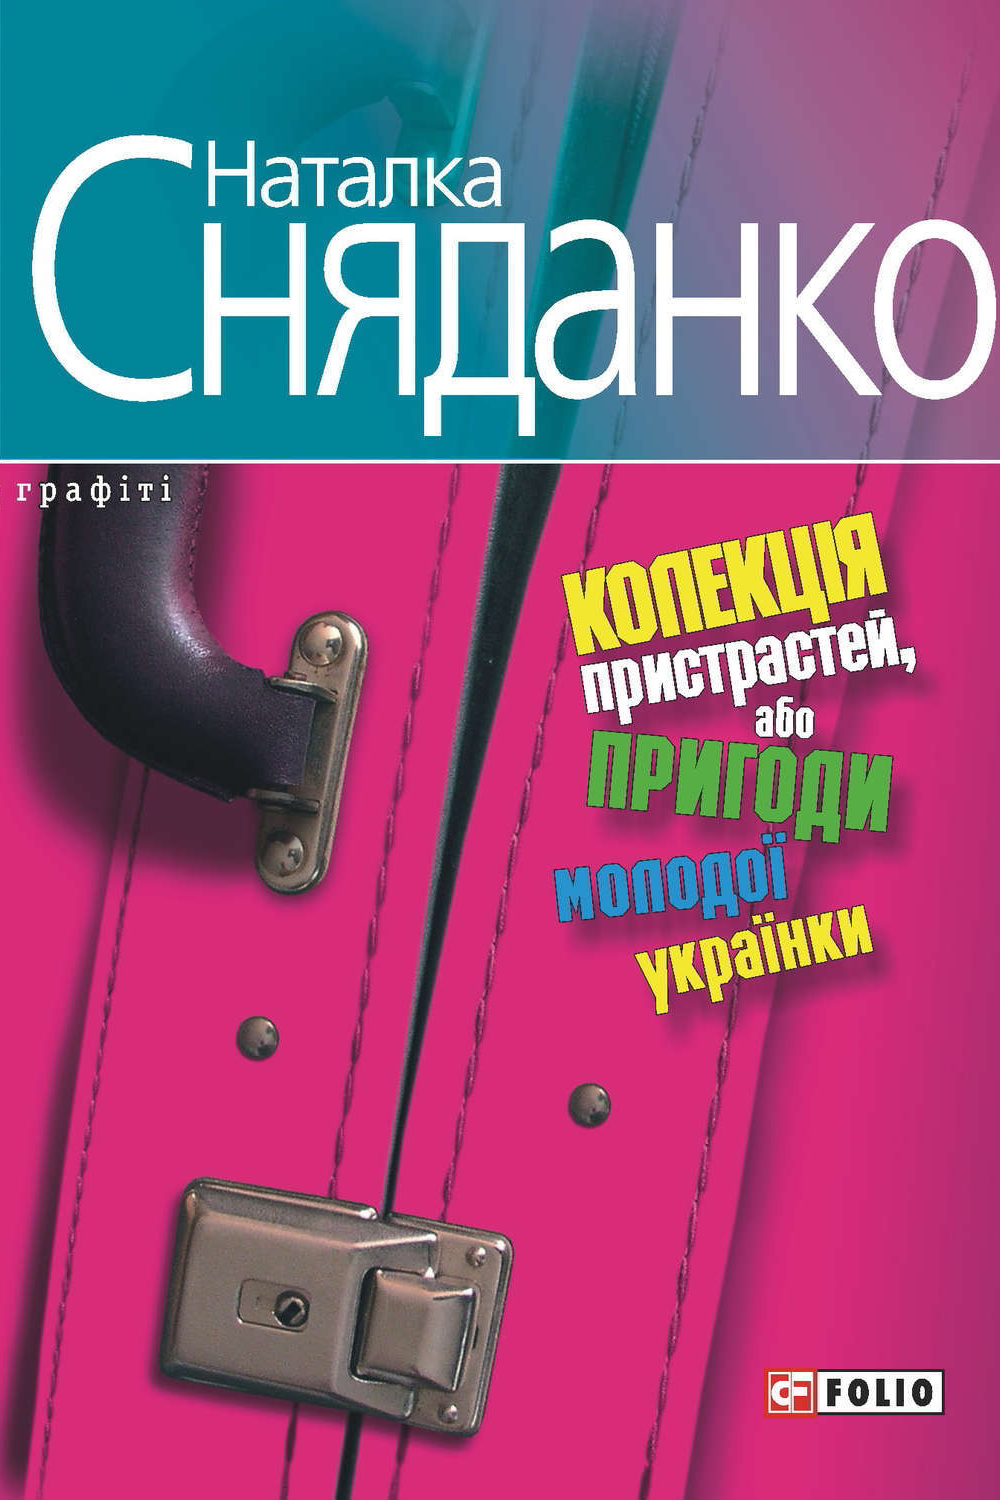 Колекція пристрастей, або пригоди молодої українки - Наталка Сняданко - Слухати Книги Українською Онлайн Безкоштовно 📘 Knigi-Audio.com/uk/